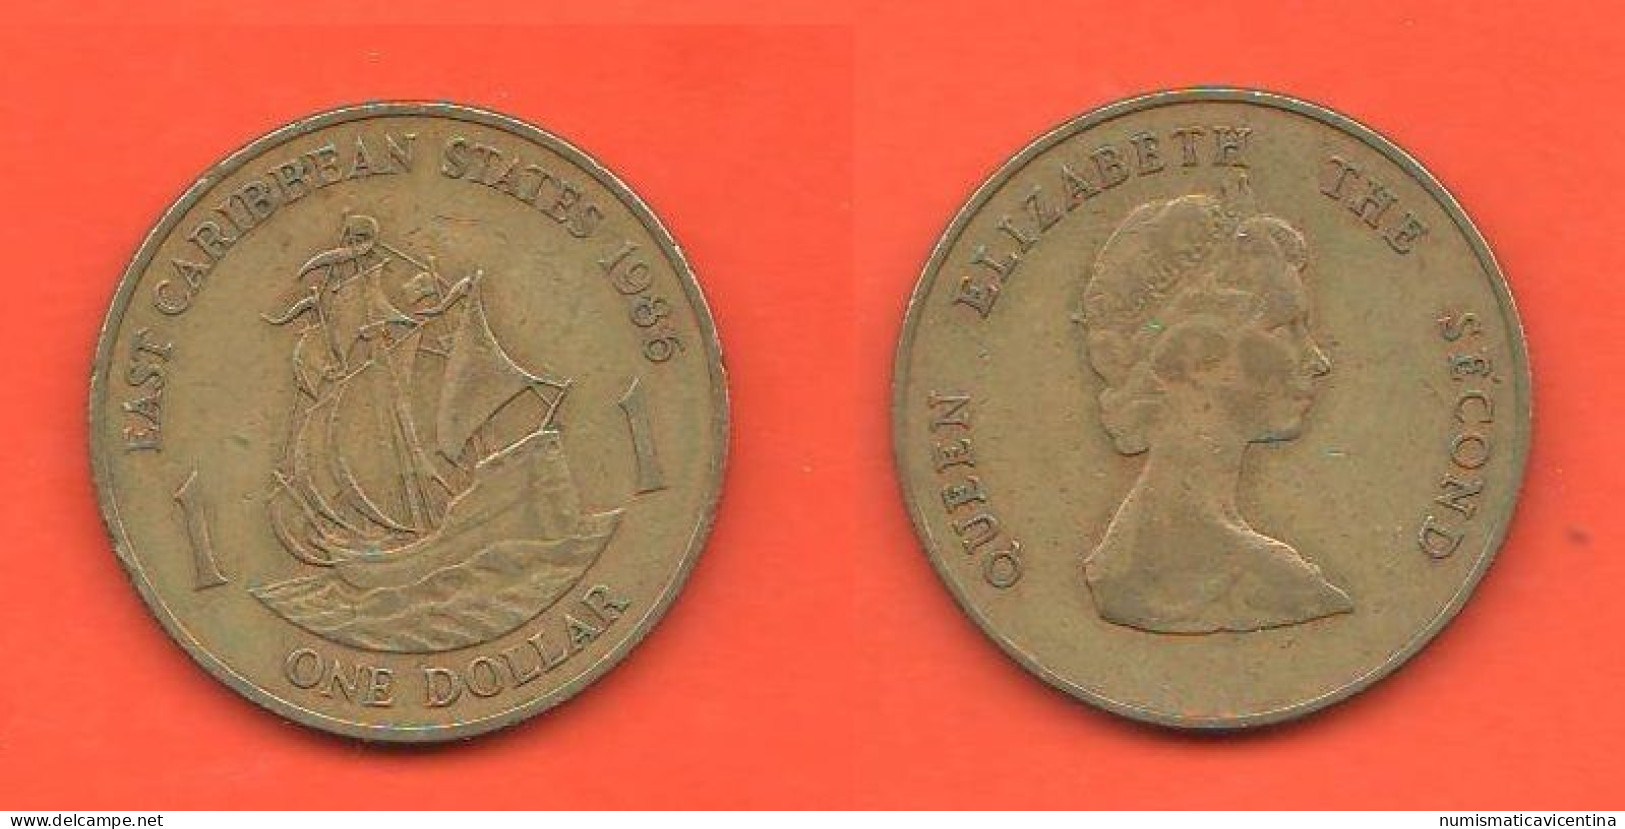 Caraibi 1 One Dollar 1986 Carribean States Bronze Coin Britanniques D'outre-mer C 7 - Caraibi Britannici (Territori)